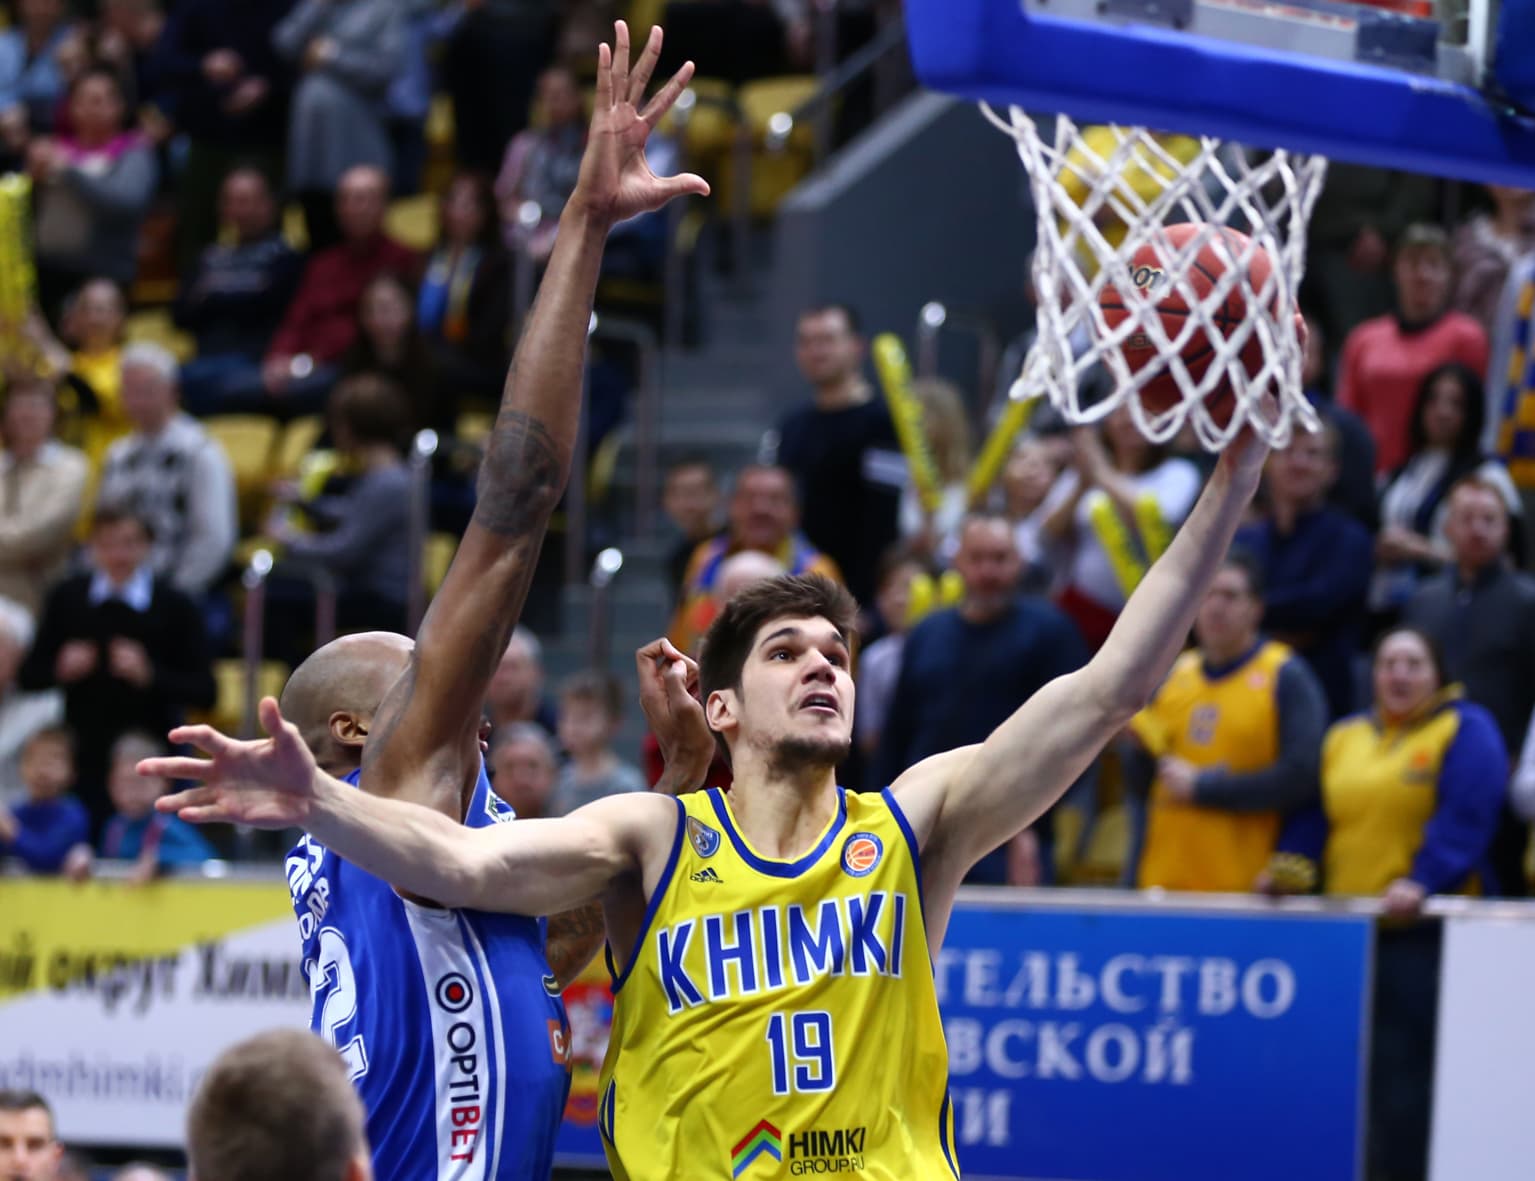 Khimki’s Defense Stifles Kalev